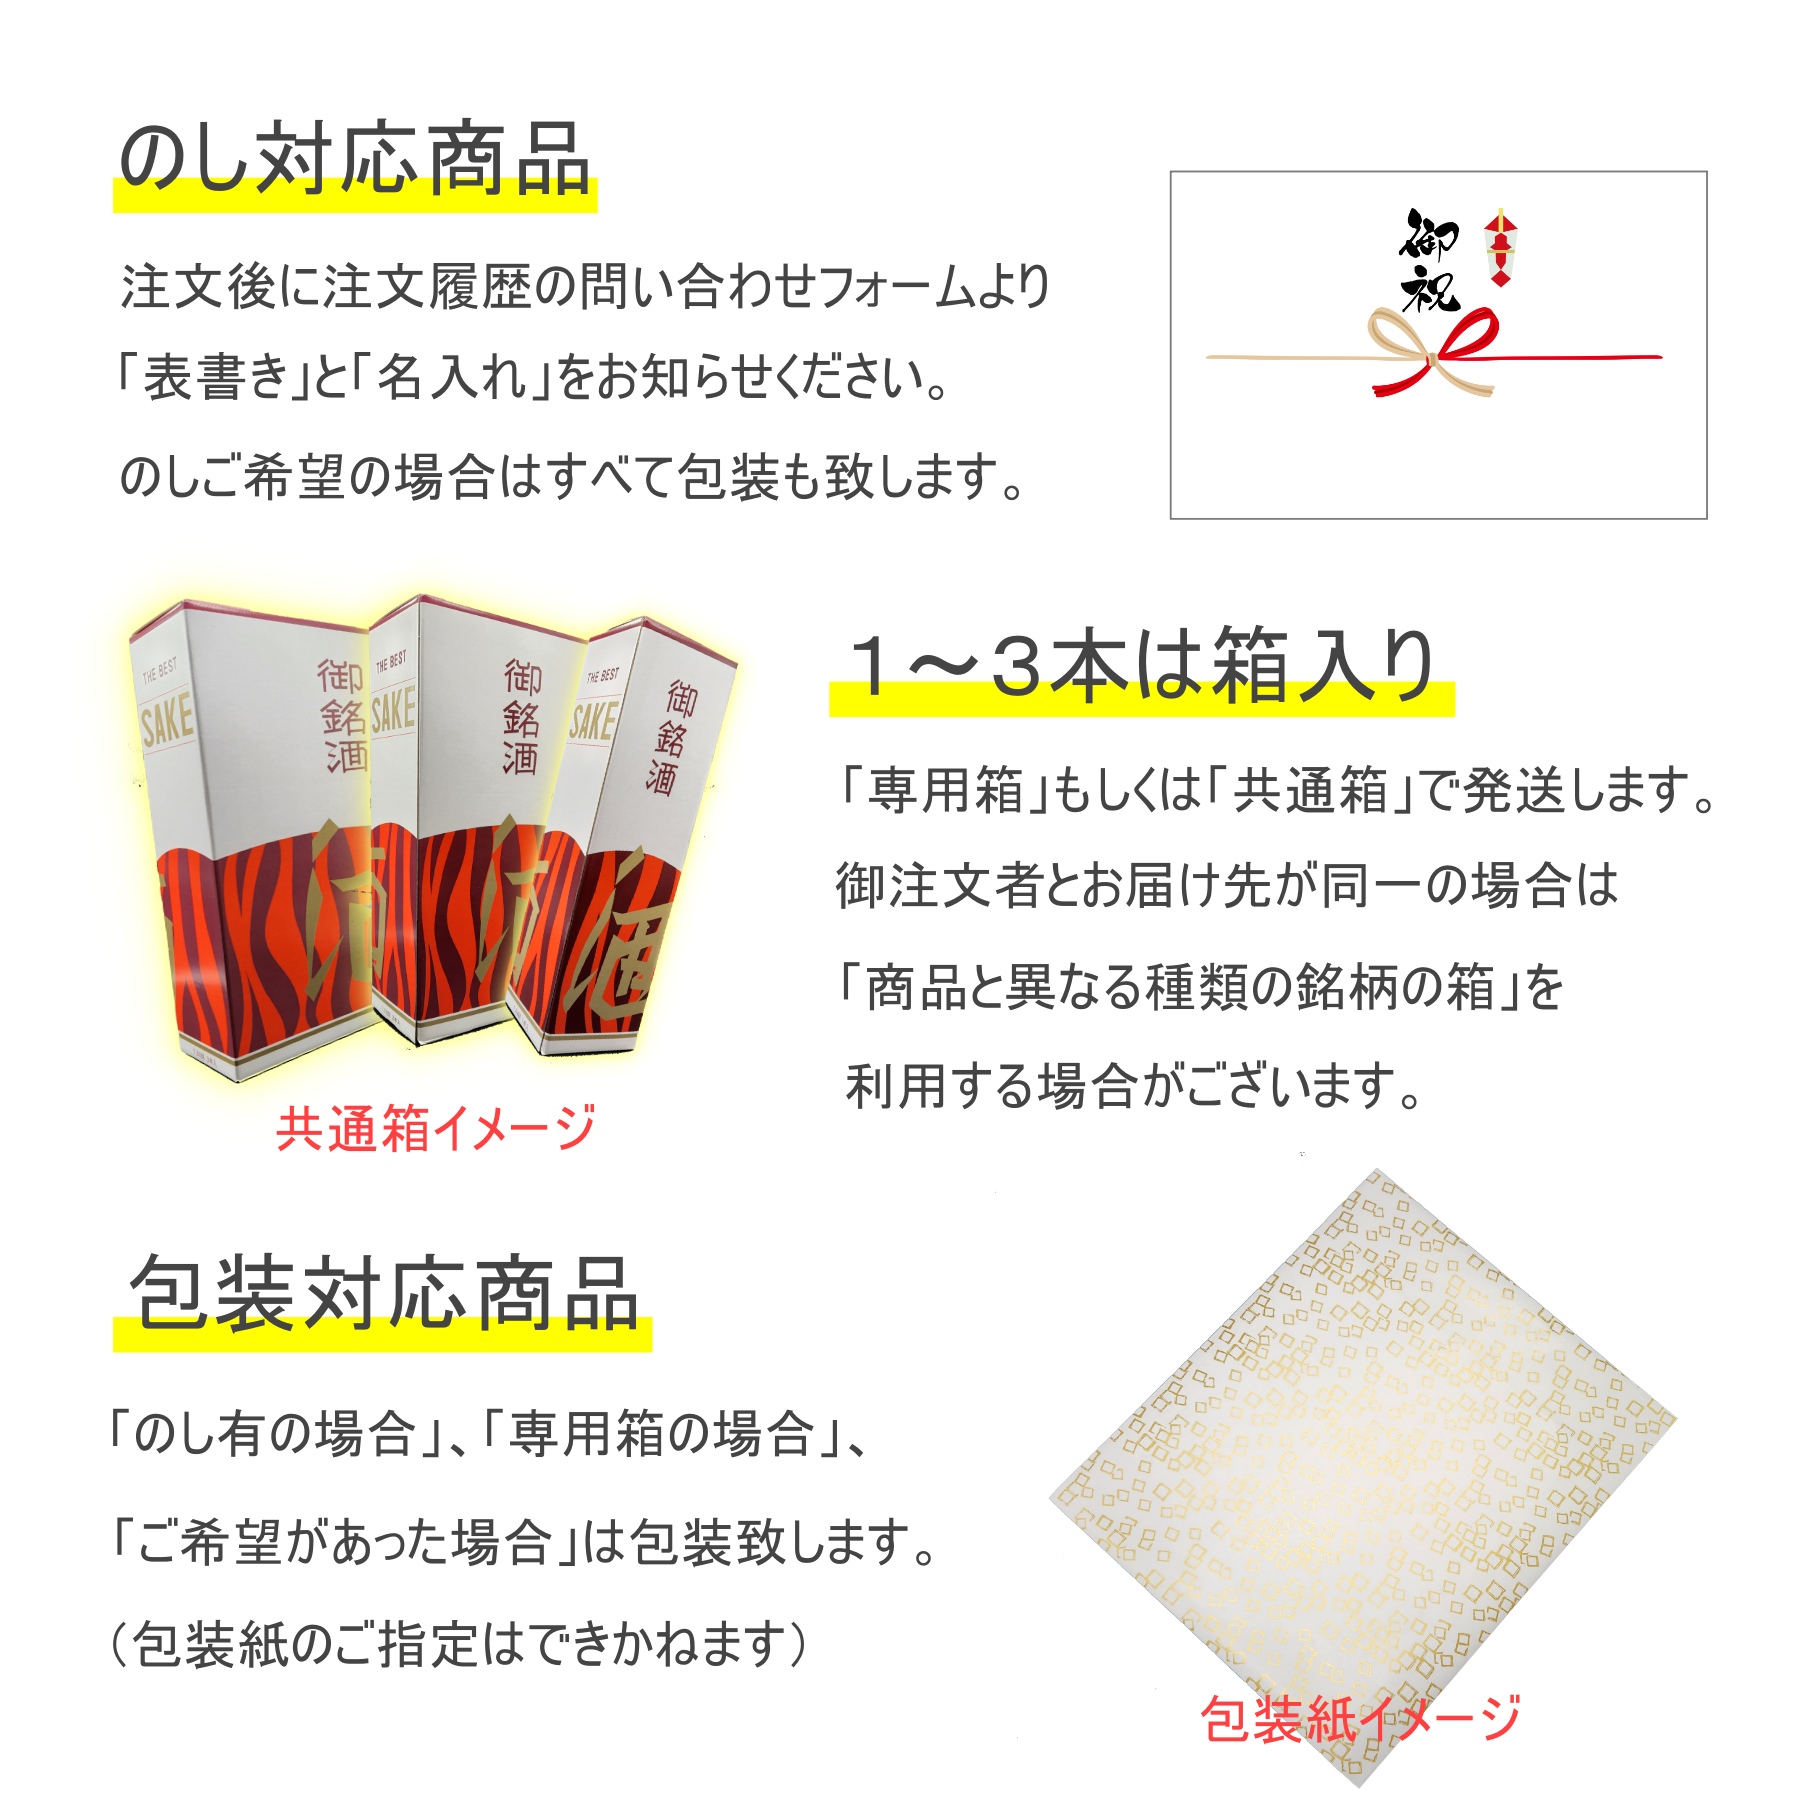  preeminence .. Special . sake preeminence 1800ml 1.8L japan sake ground sake 